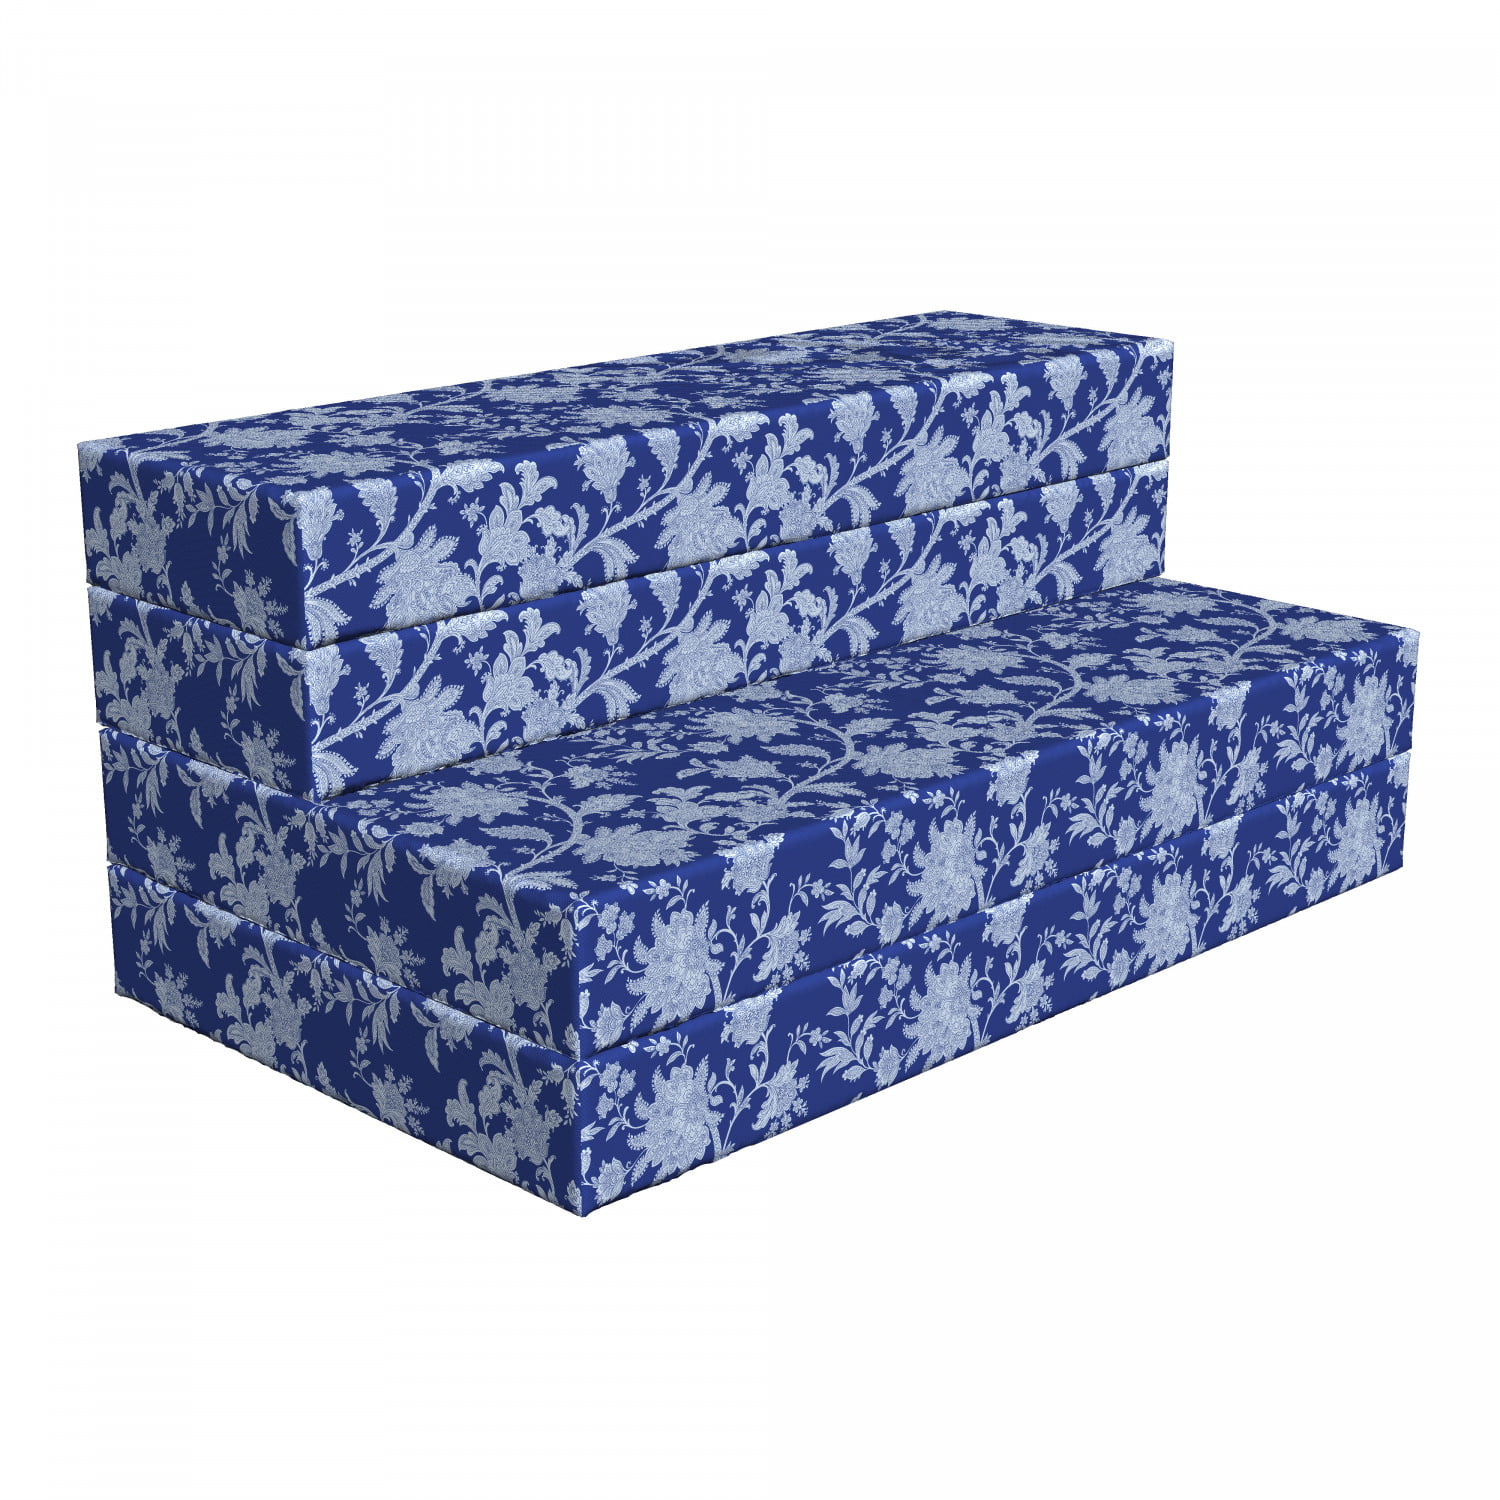 Paisley Pattern Ottoman 78.7 X 47.2 Royal Blue Ambesonne Floral Foldable Mattress